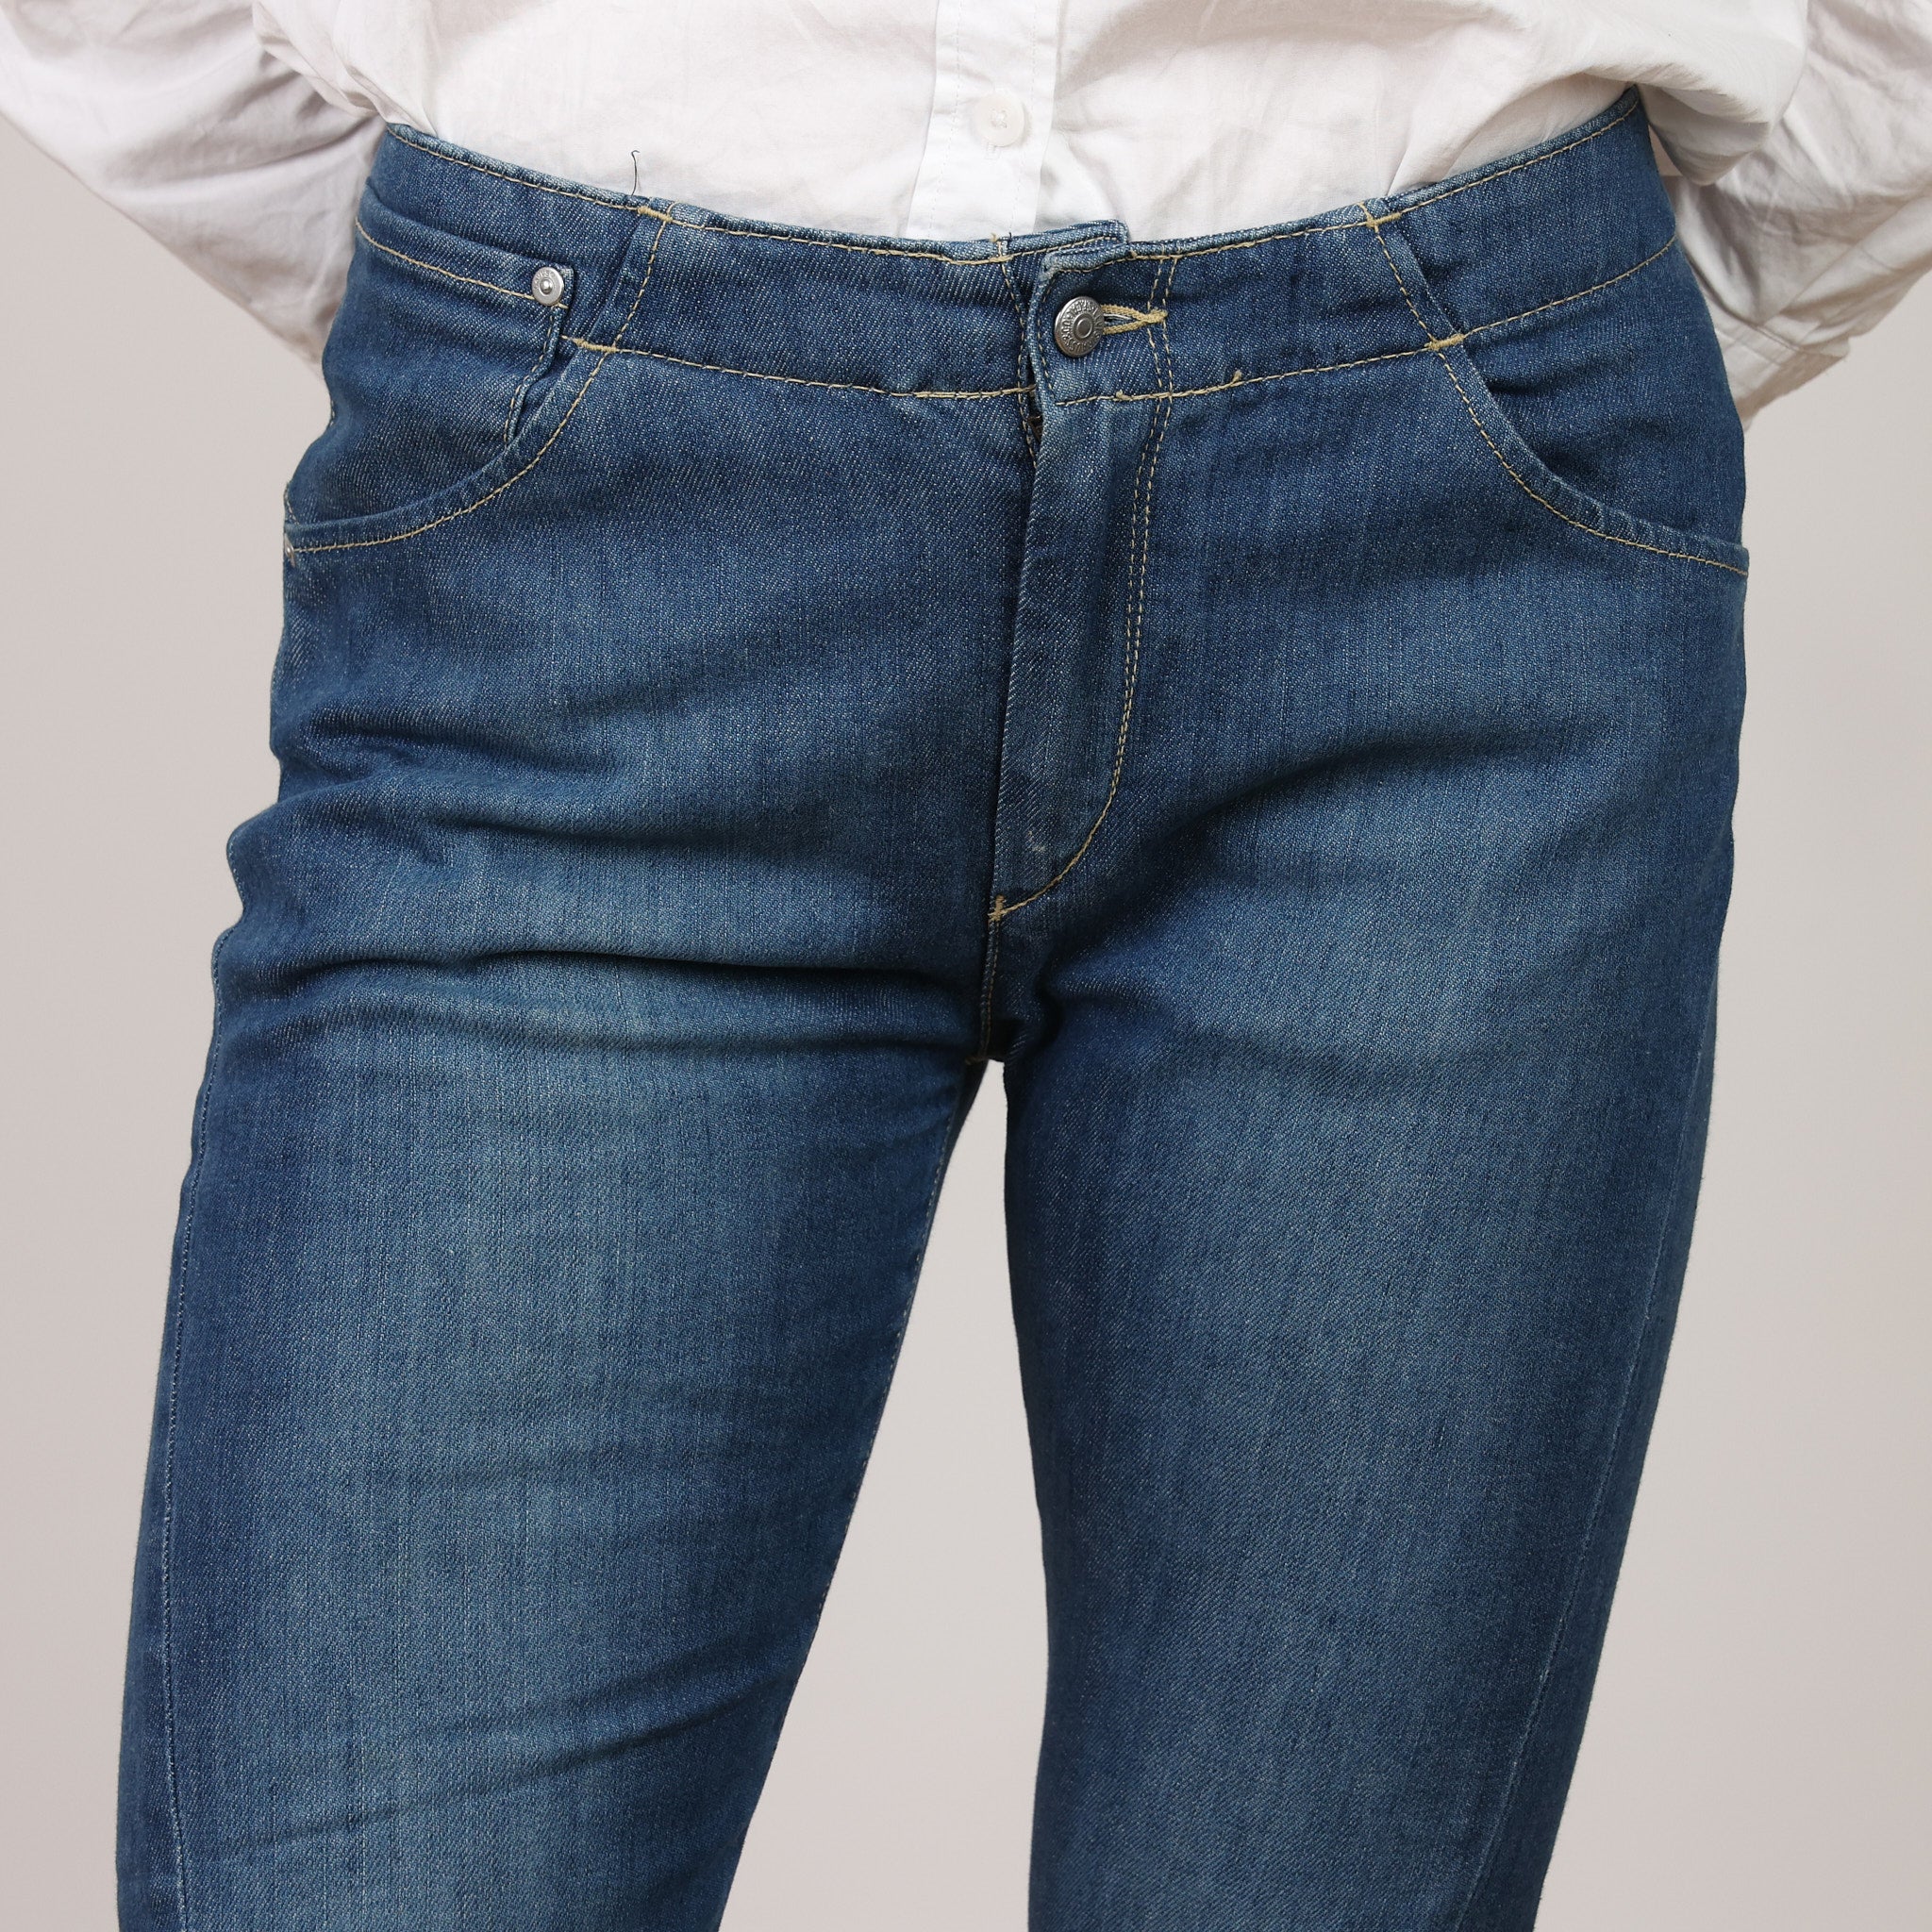 Jeans, UK Size 12